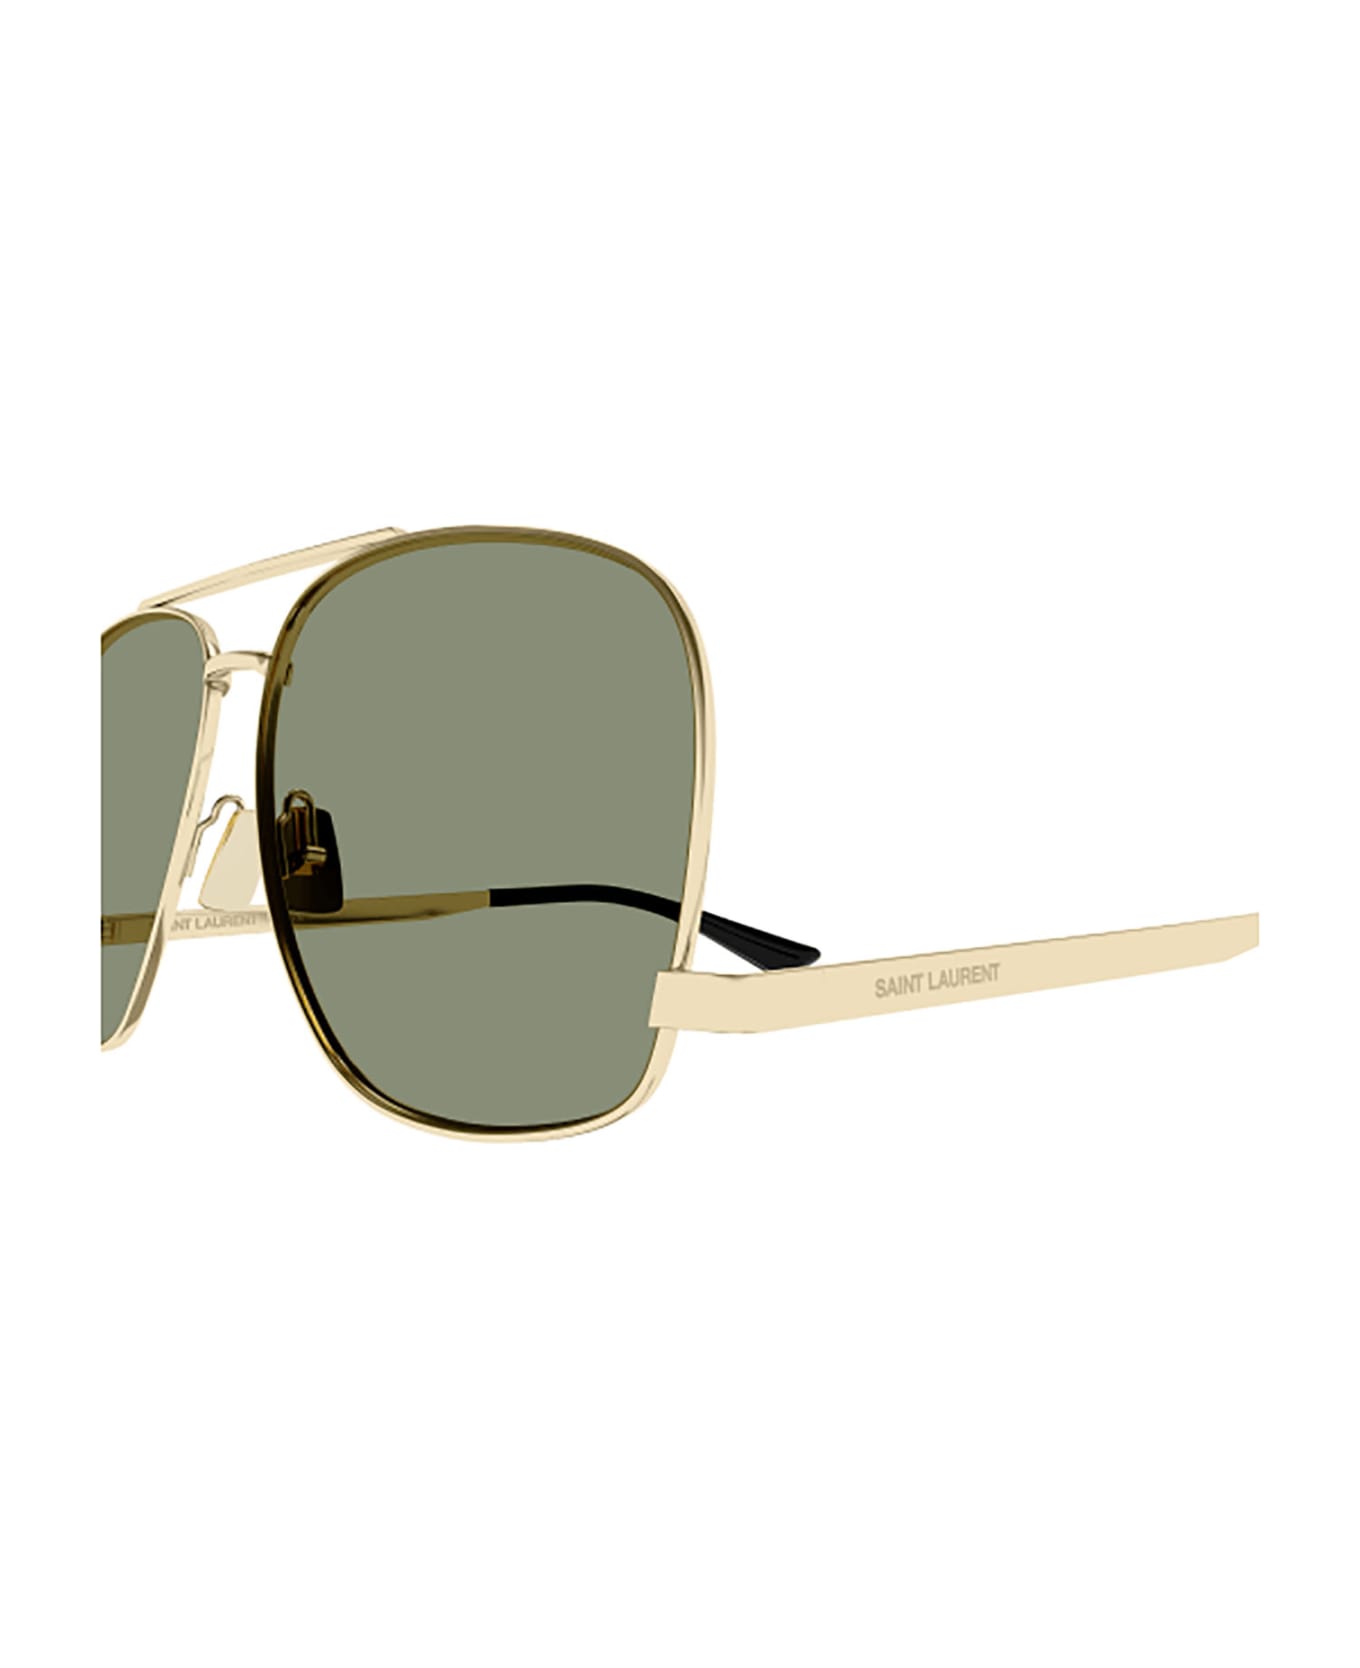 Saint Laurent Eyewear SL 653 LEON Sunglasses gradient - Gold Gold Green